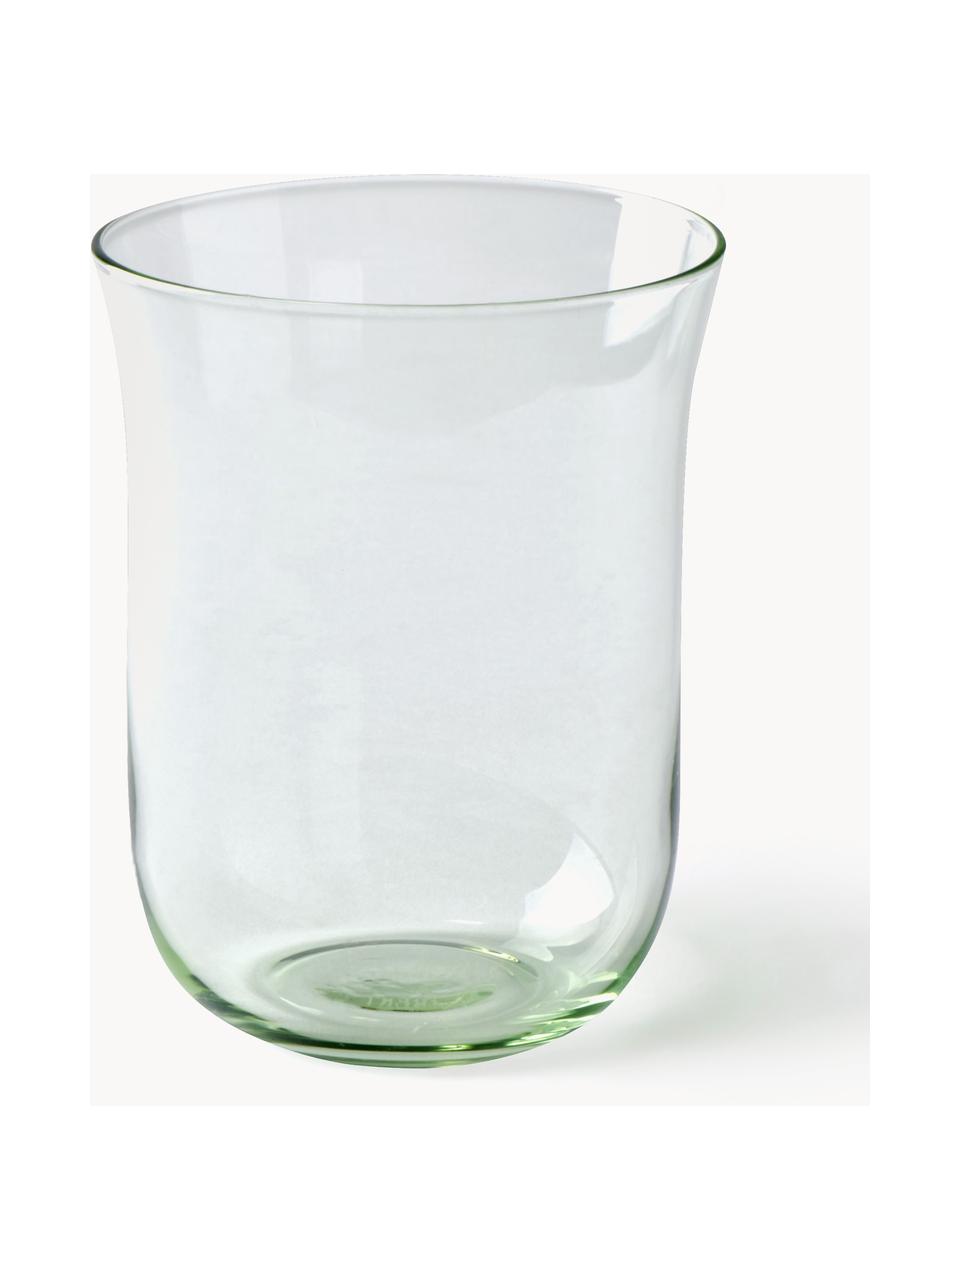 Bicchieri acqua in vetro soffiato Corsica 6 pz, Vetro, Verde chiaro trasparente, Ø 9 x Alt. 11 cm,  300 ml